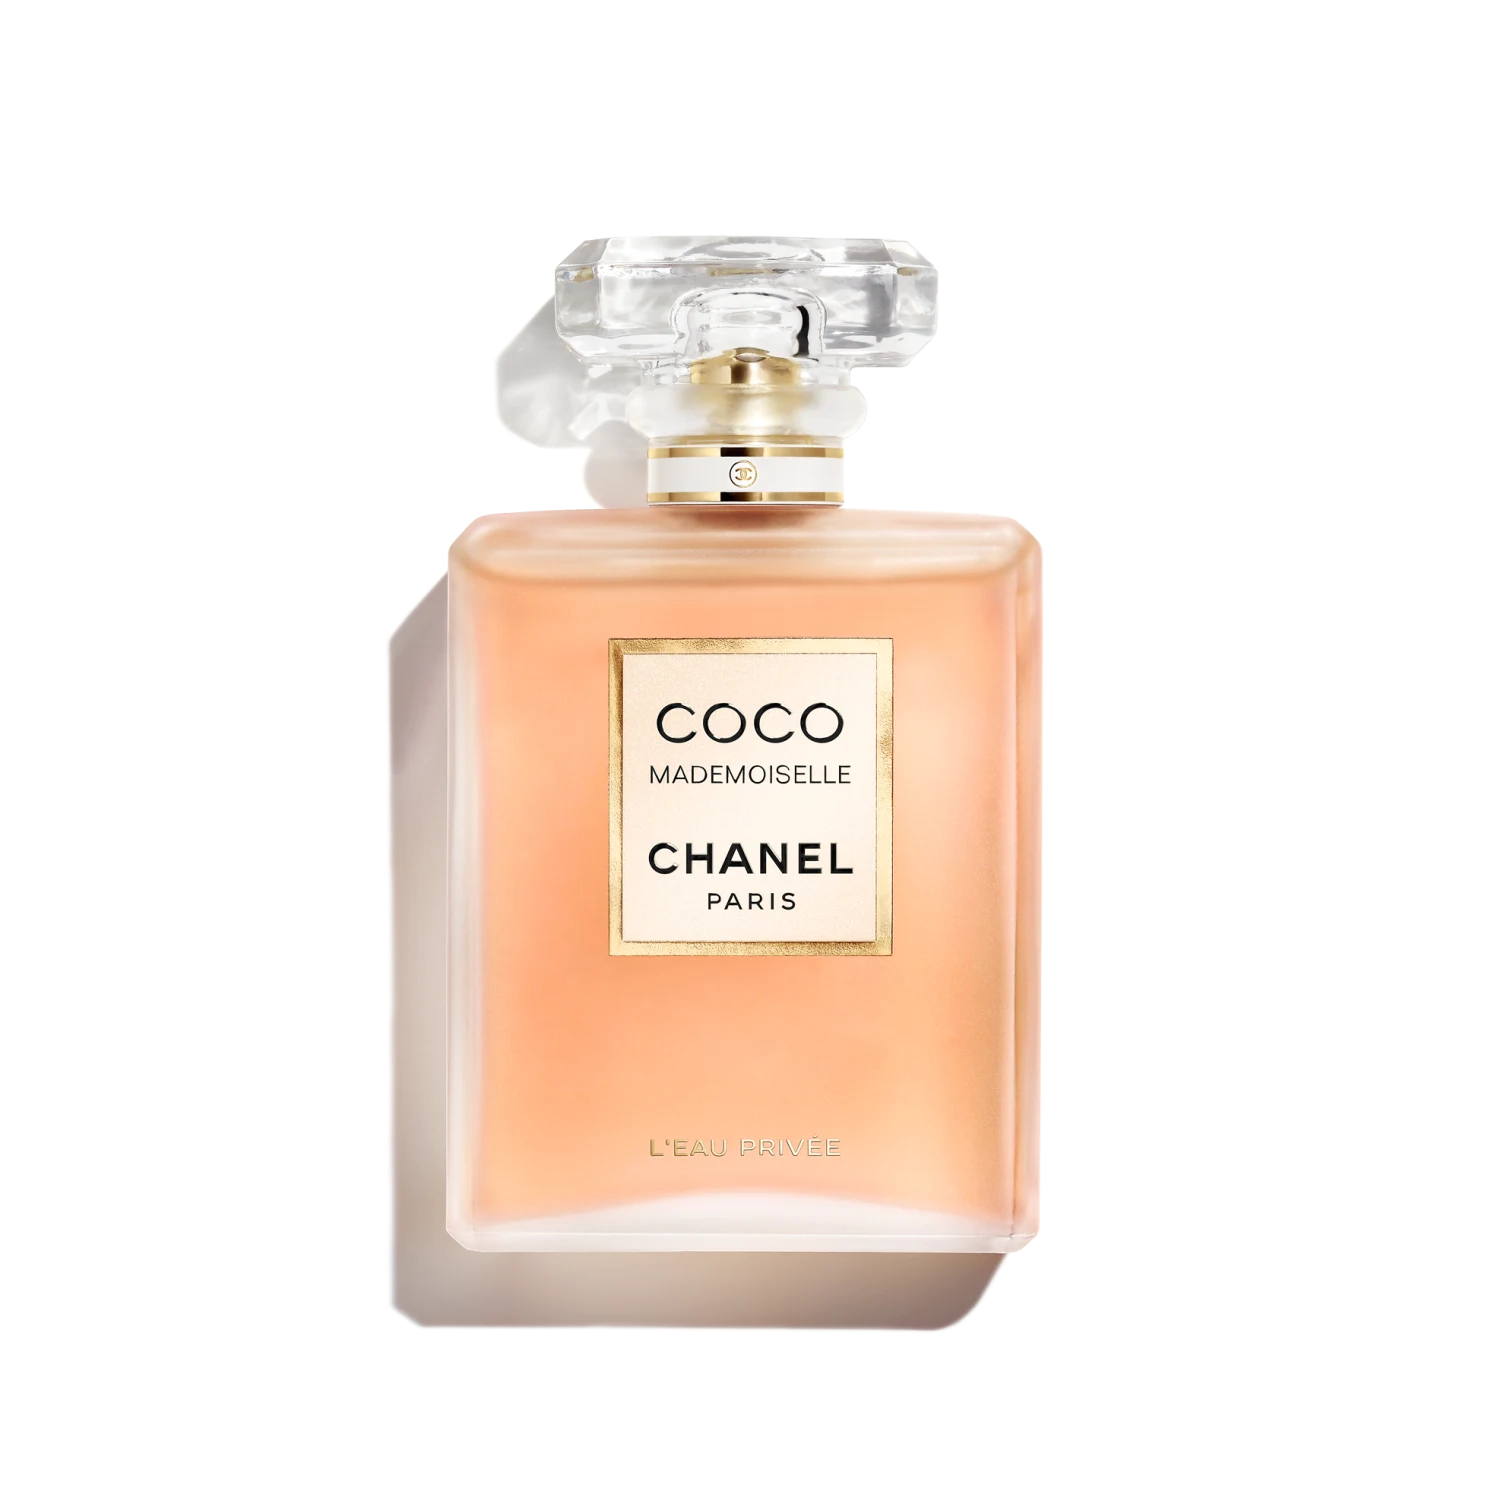 Вода парфюмерная Chanel Coco Mademoiselle L'Eau Privee женская, 100 мл